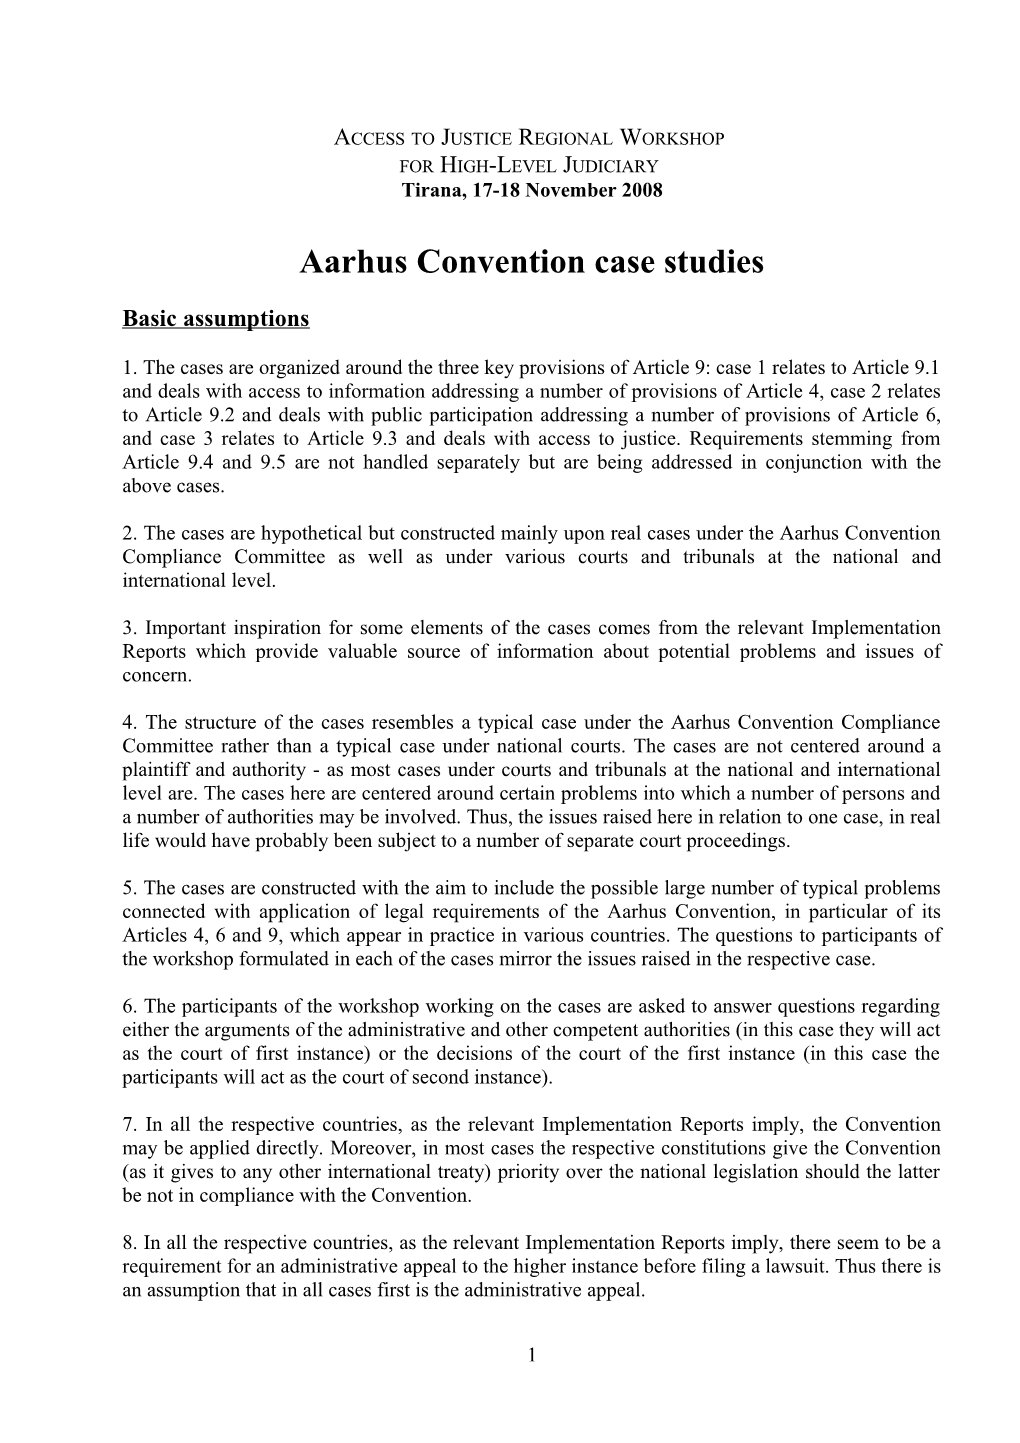 Aarhus Convention Case Studies